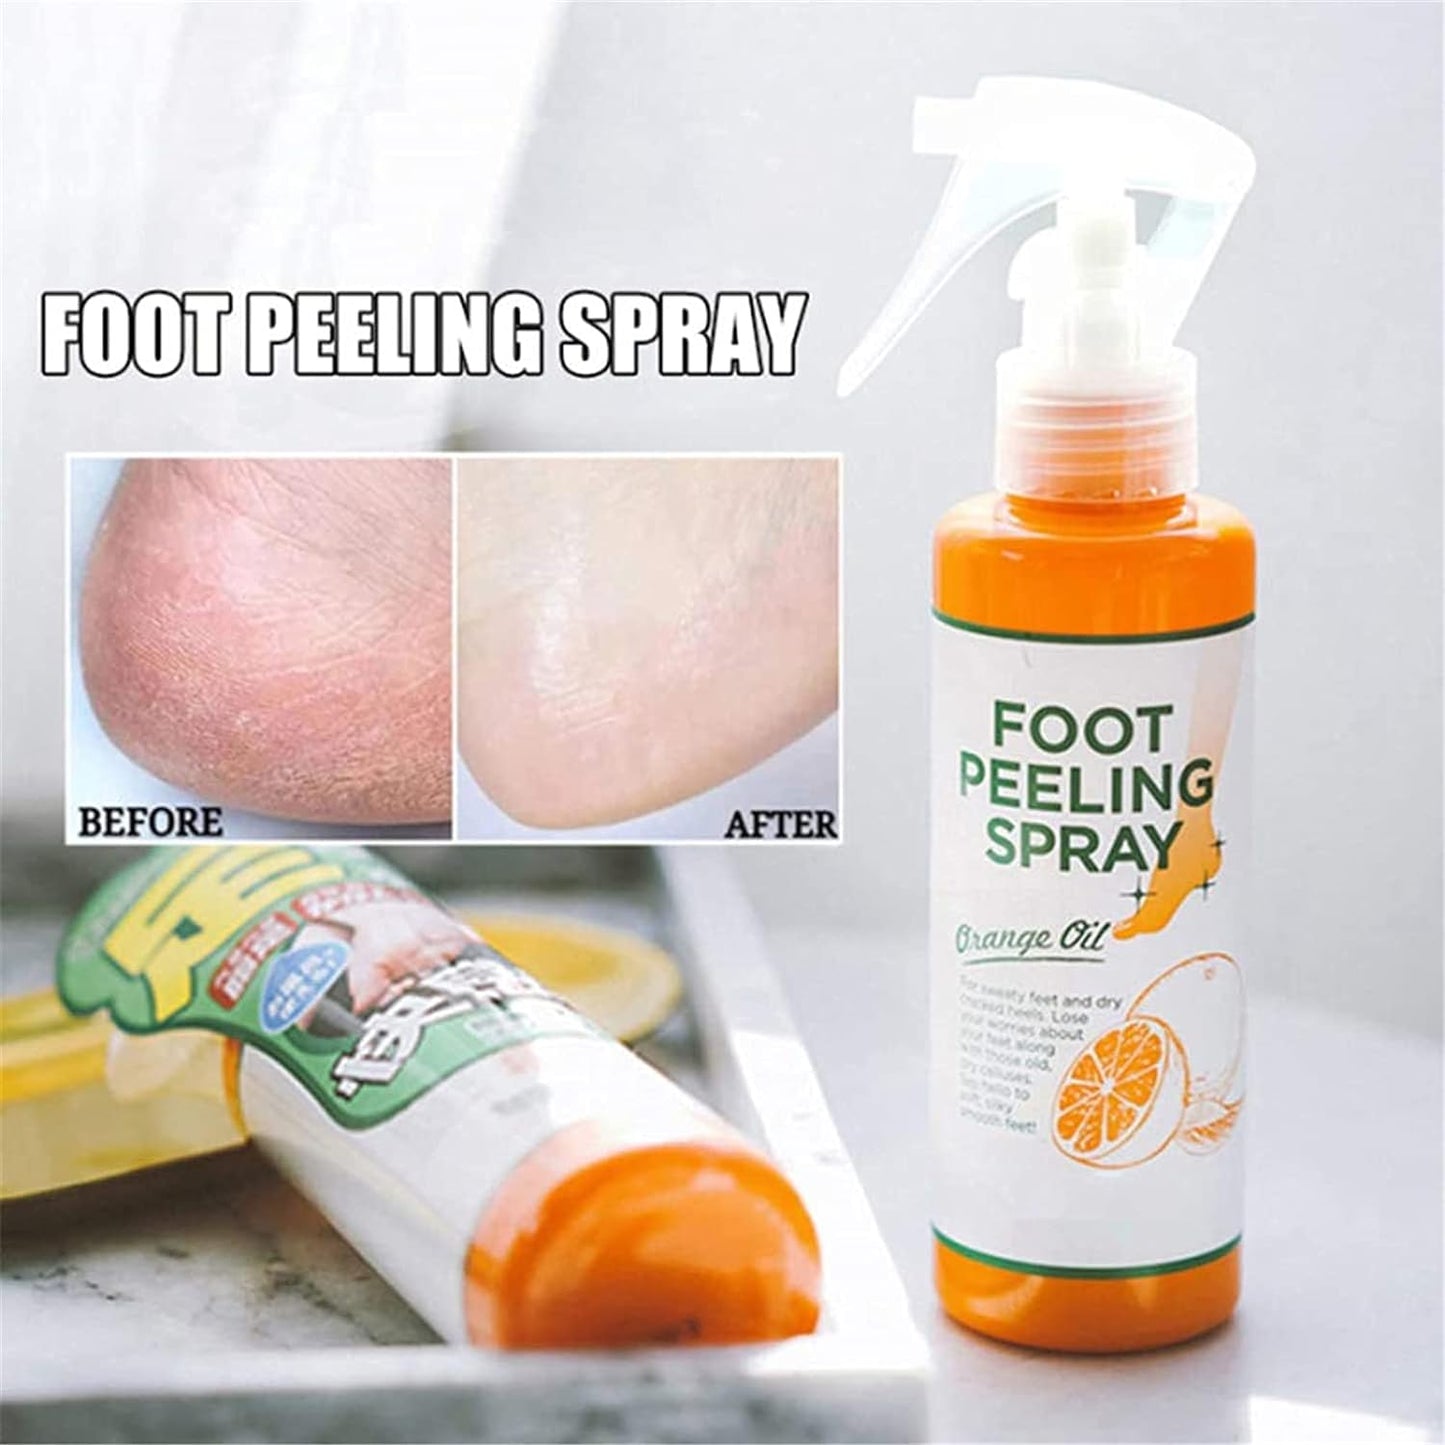 Gokame Foot Peeling Spray Orange Oil, Foot Peeling Spray That Remove Dead Skin, Hydrating Nourish Peel Off Spray, Remove Dead Skin within Seconds, Exfoliating Peeling & Calluses on Feet, 110ML